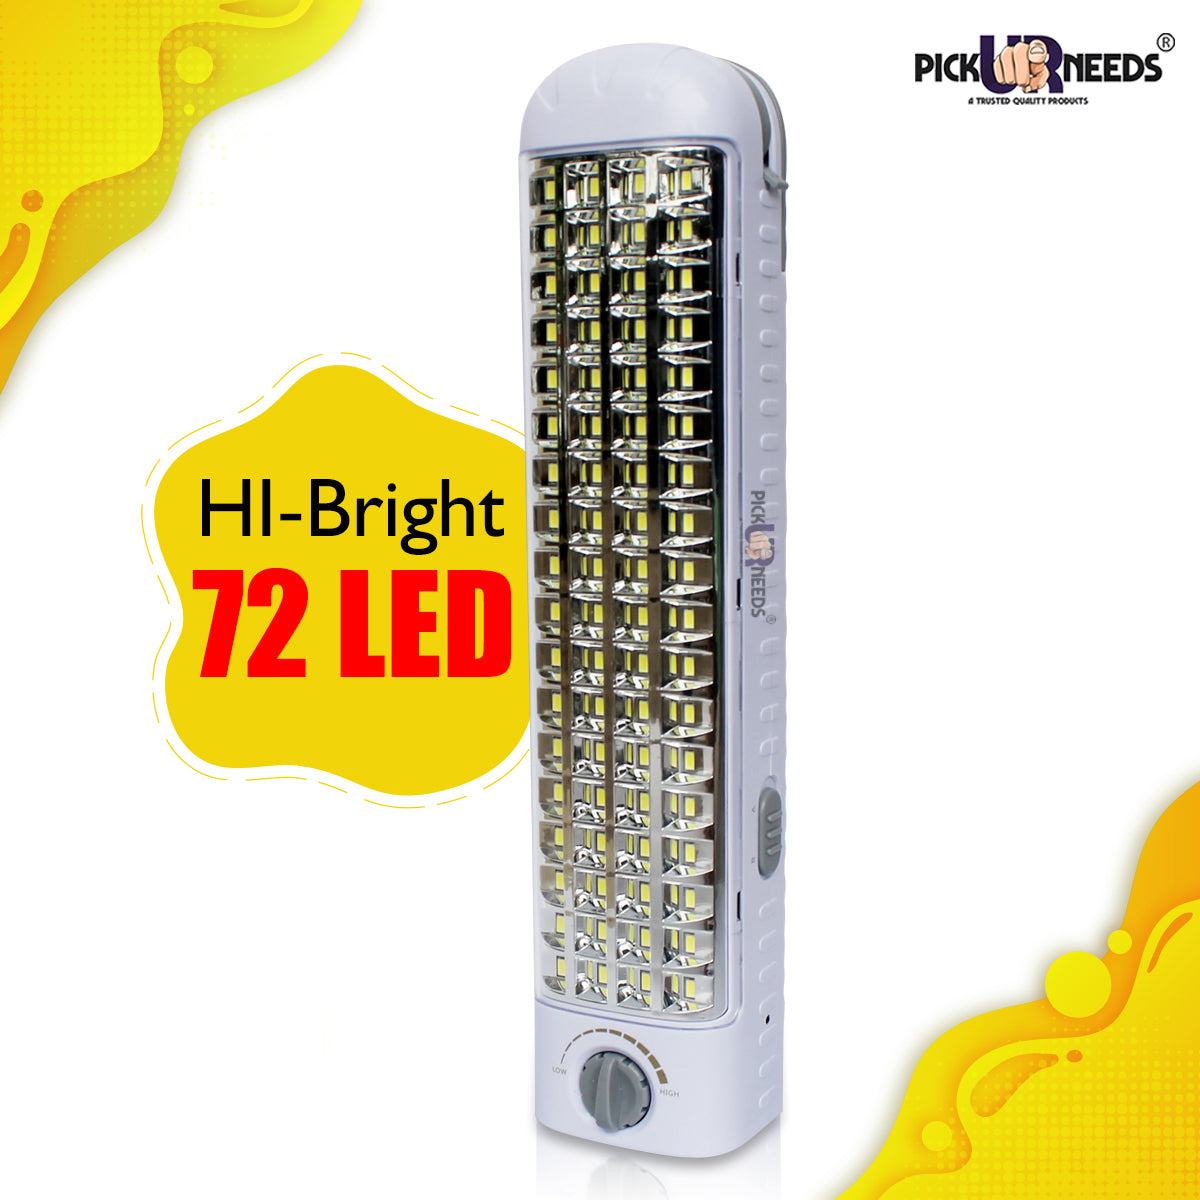 Pick Ur Needs Rechargeable Long Emergency Home Light 72 LED 8 hrs Lantern Emergency Light  (White)